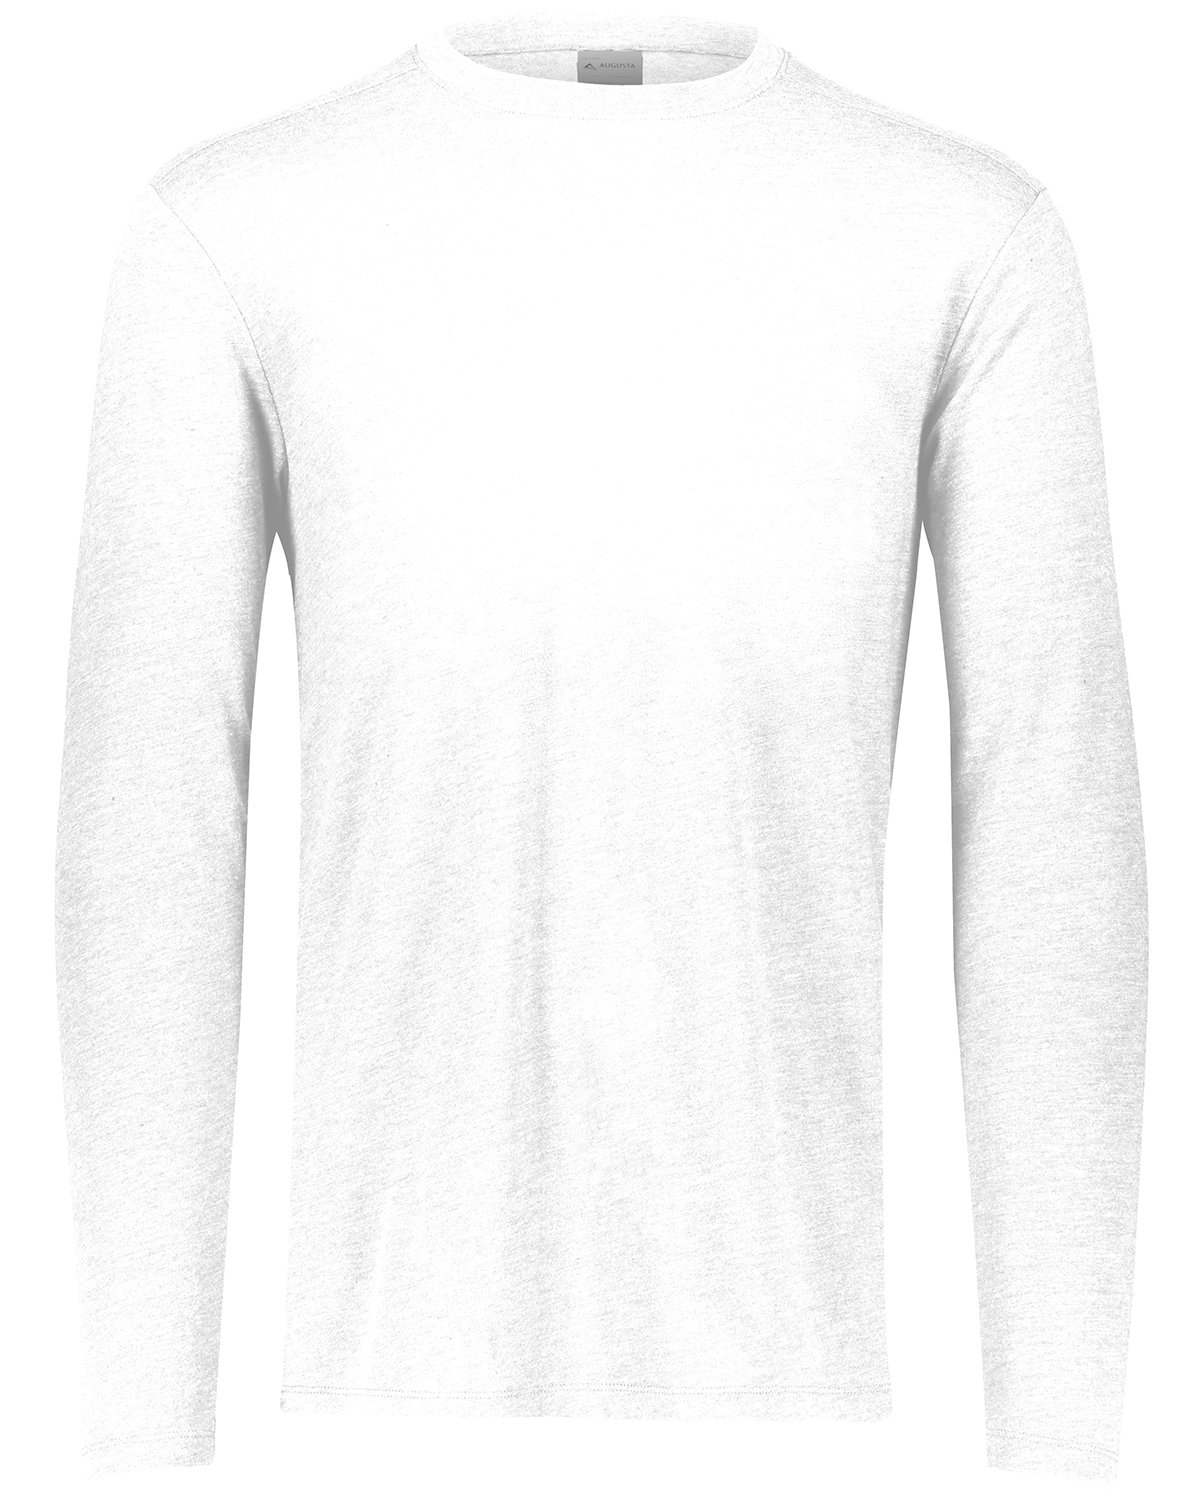 Buy/Shop T-Shirts – A4 Online in NJ – Bordova Uniforms